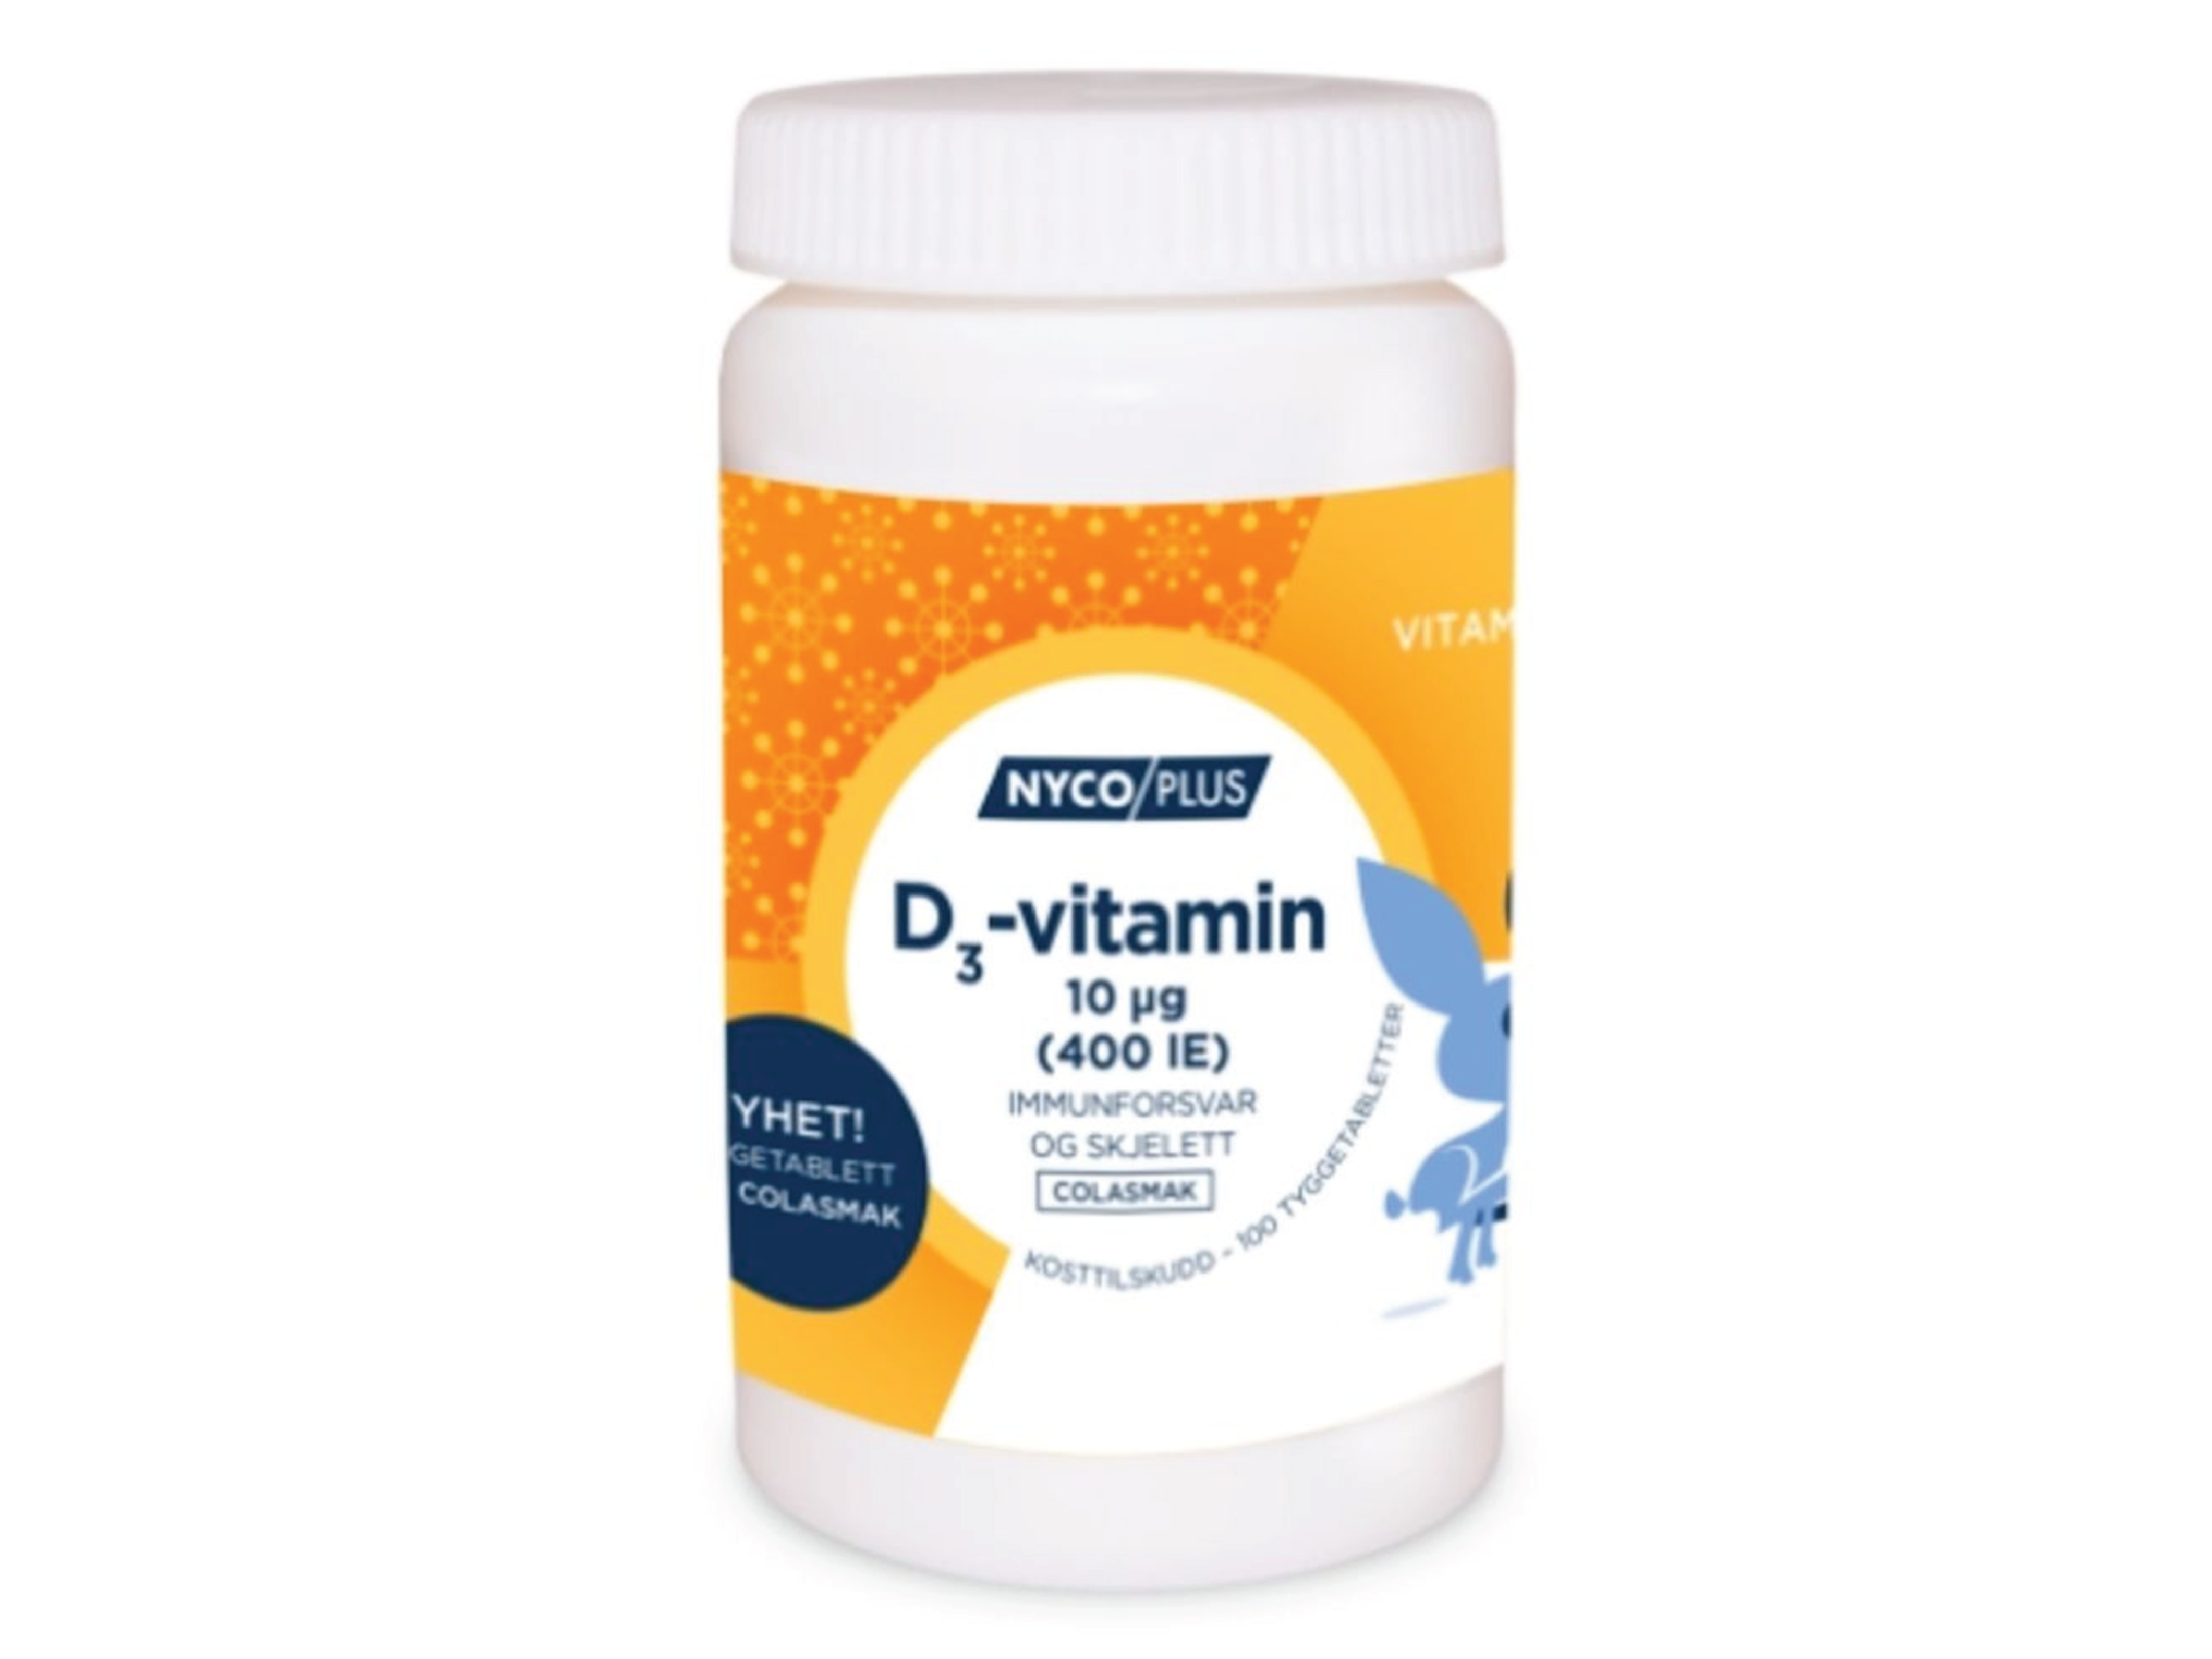 Nycoplus D-vitamin 10 µg med colasmak, 100 tyggetabletter